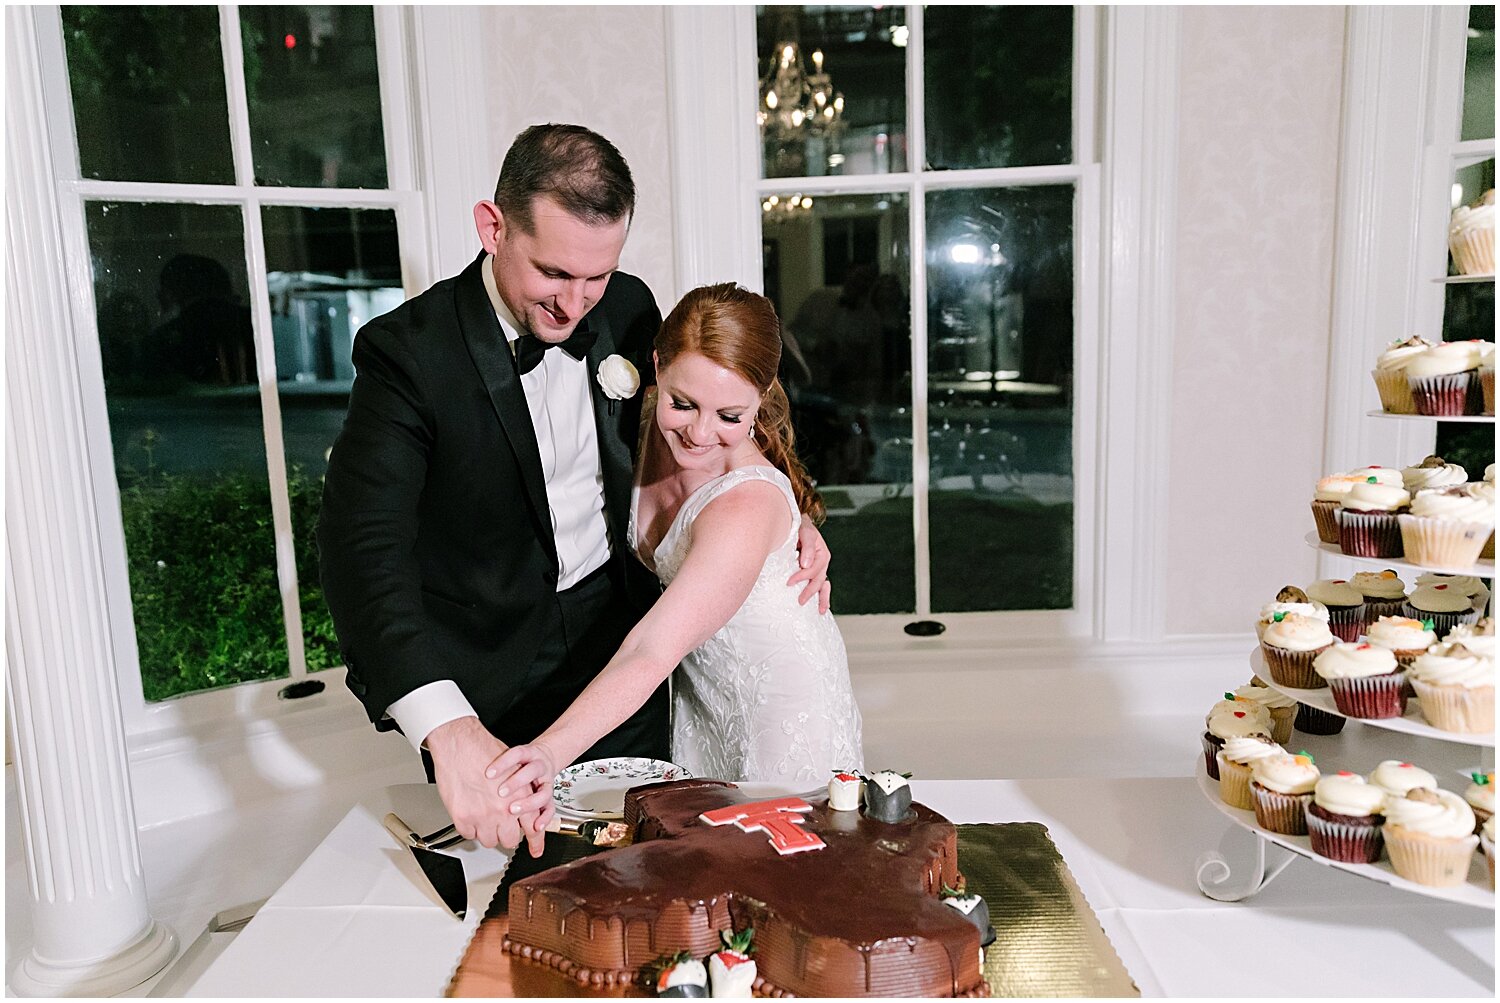  bride and groom cutting their wedding cake 